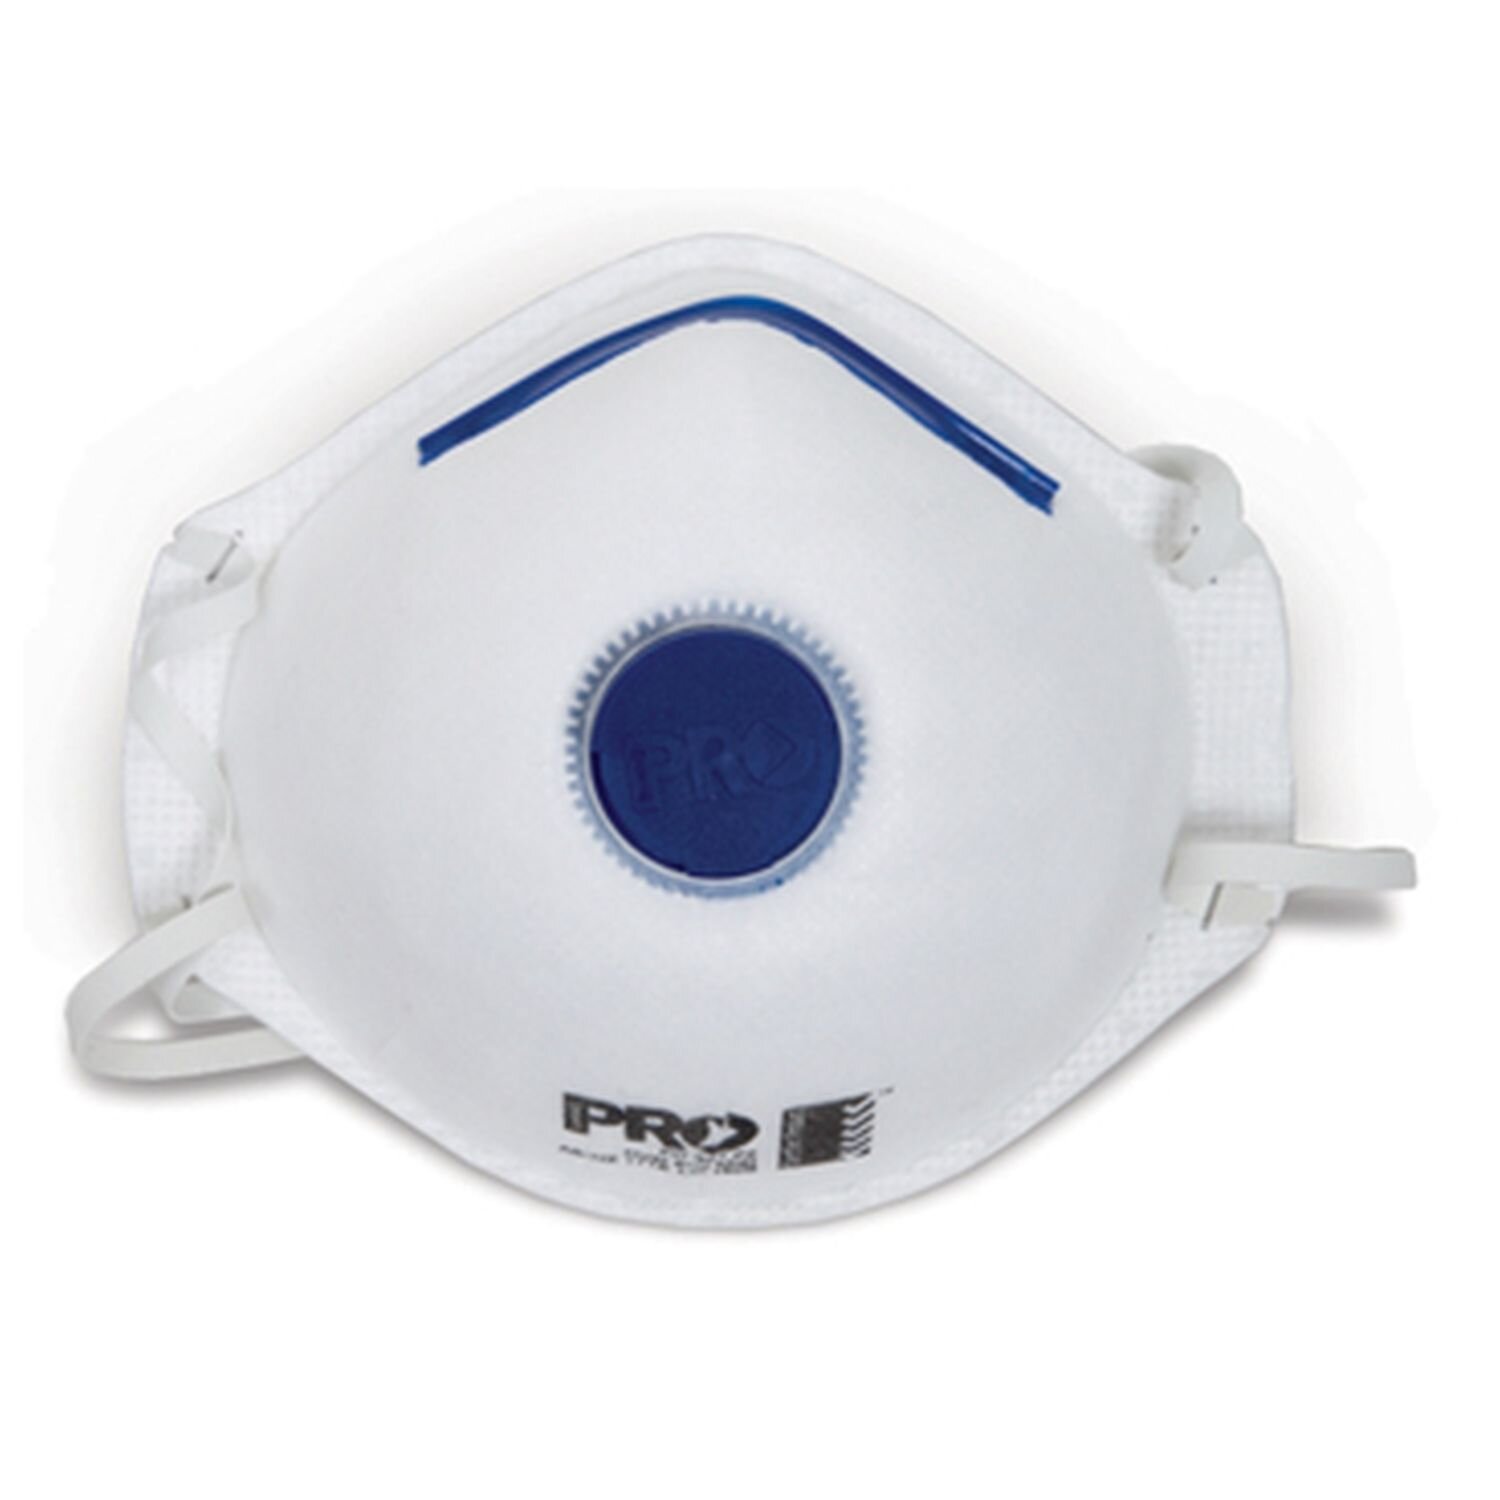 Respirator P2 Valve Mask (PC321) Box 12